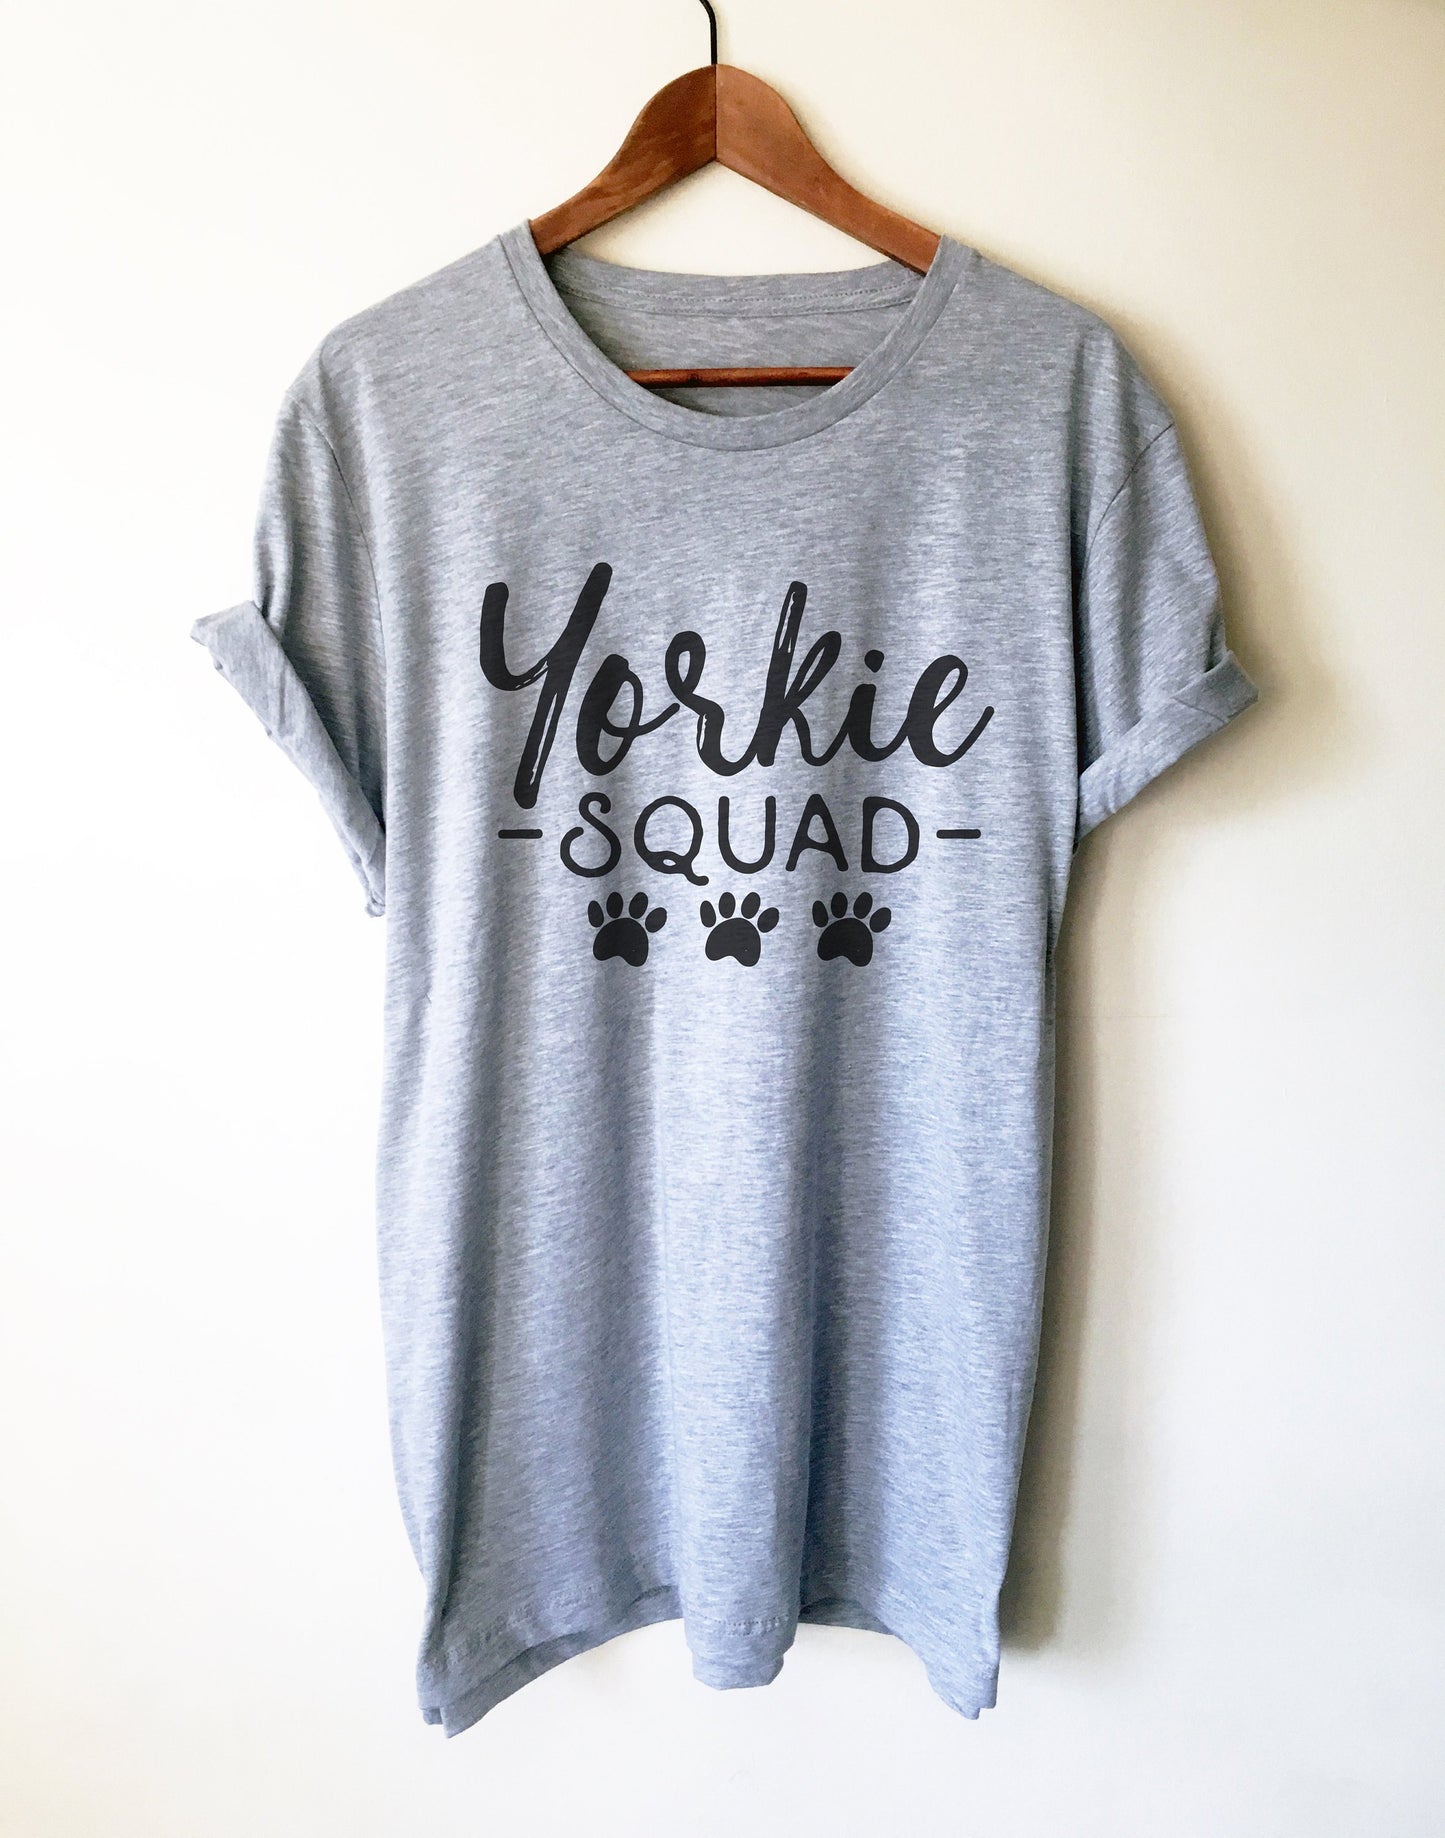 Yorkie Squad Unisex Shirt - Yorkie Shirt, Yorkie Gifts, Yorkie Print, Yorkshire Terrier Gift, Yorkshire Terrier Shirt, Yorkie Owner